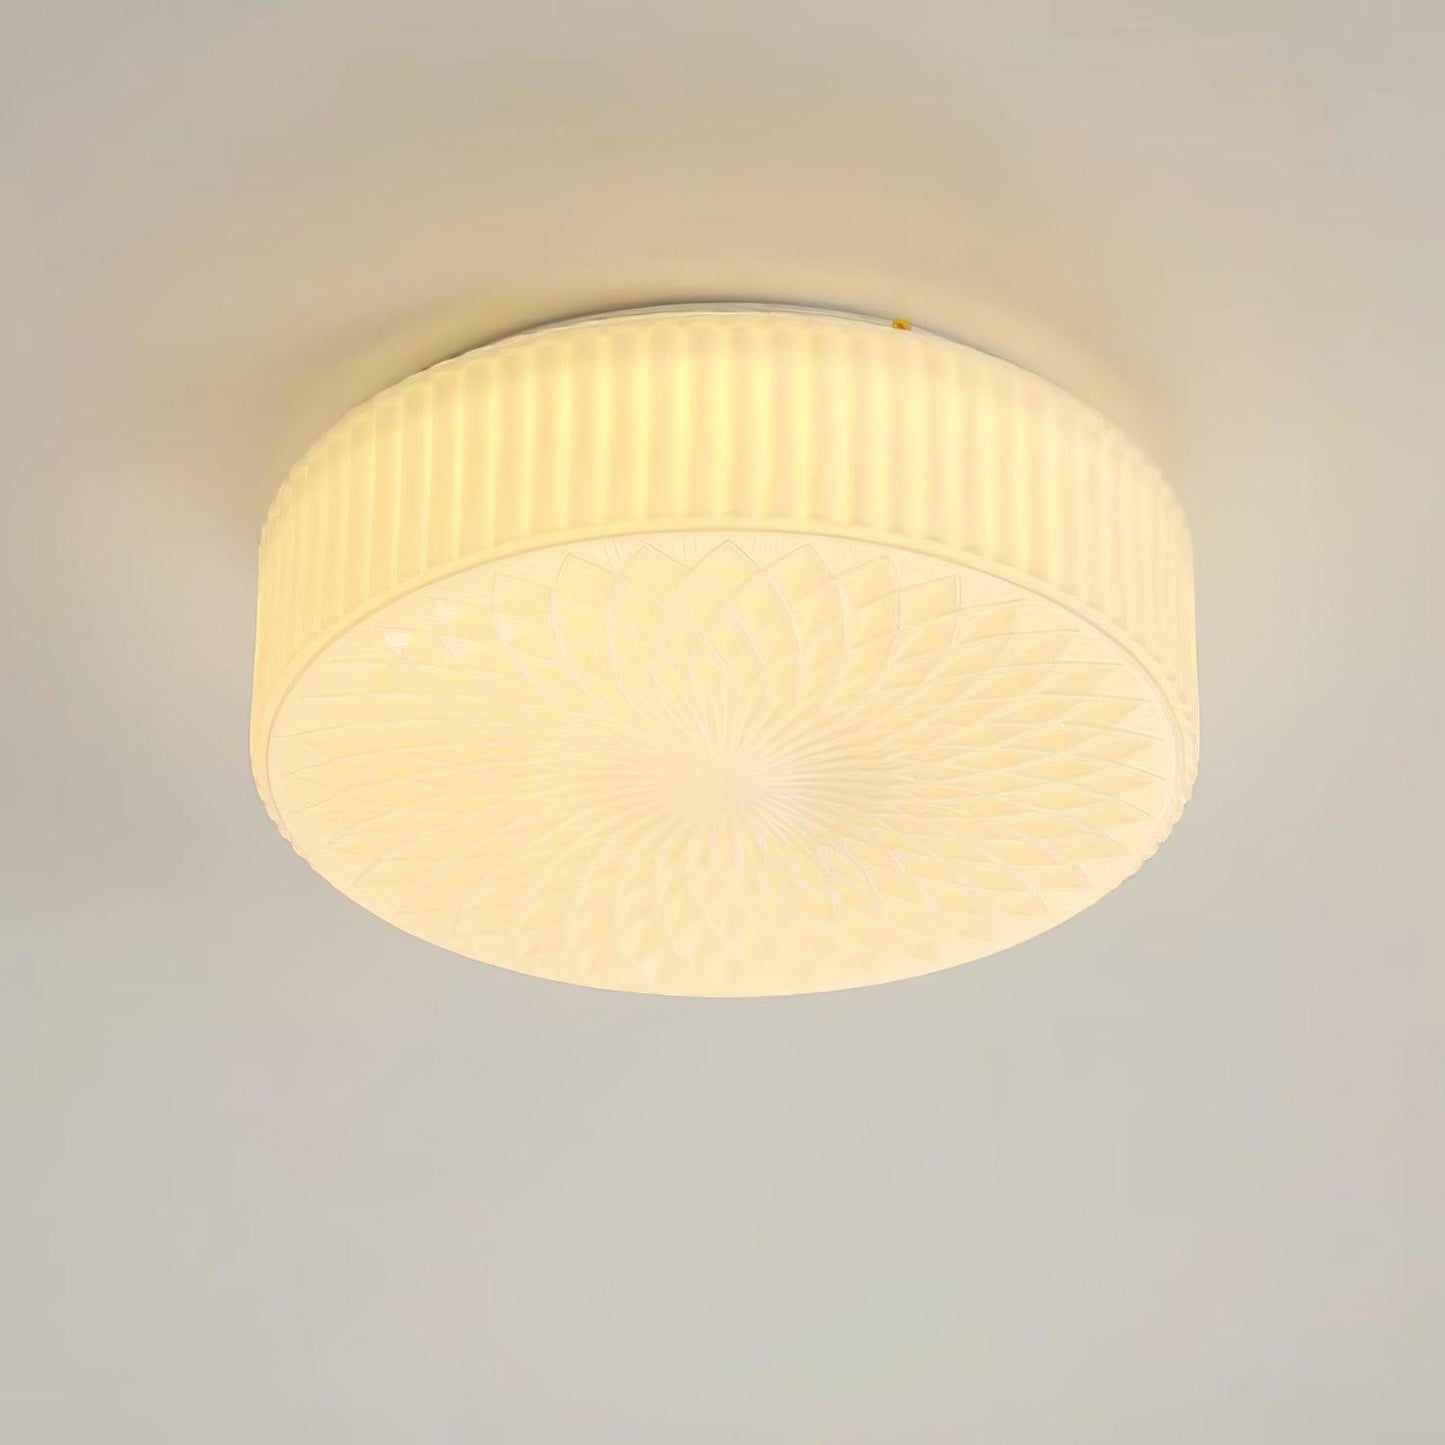 Souffle Ceiling Lamp